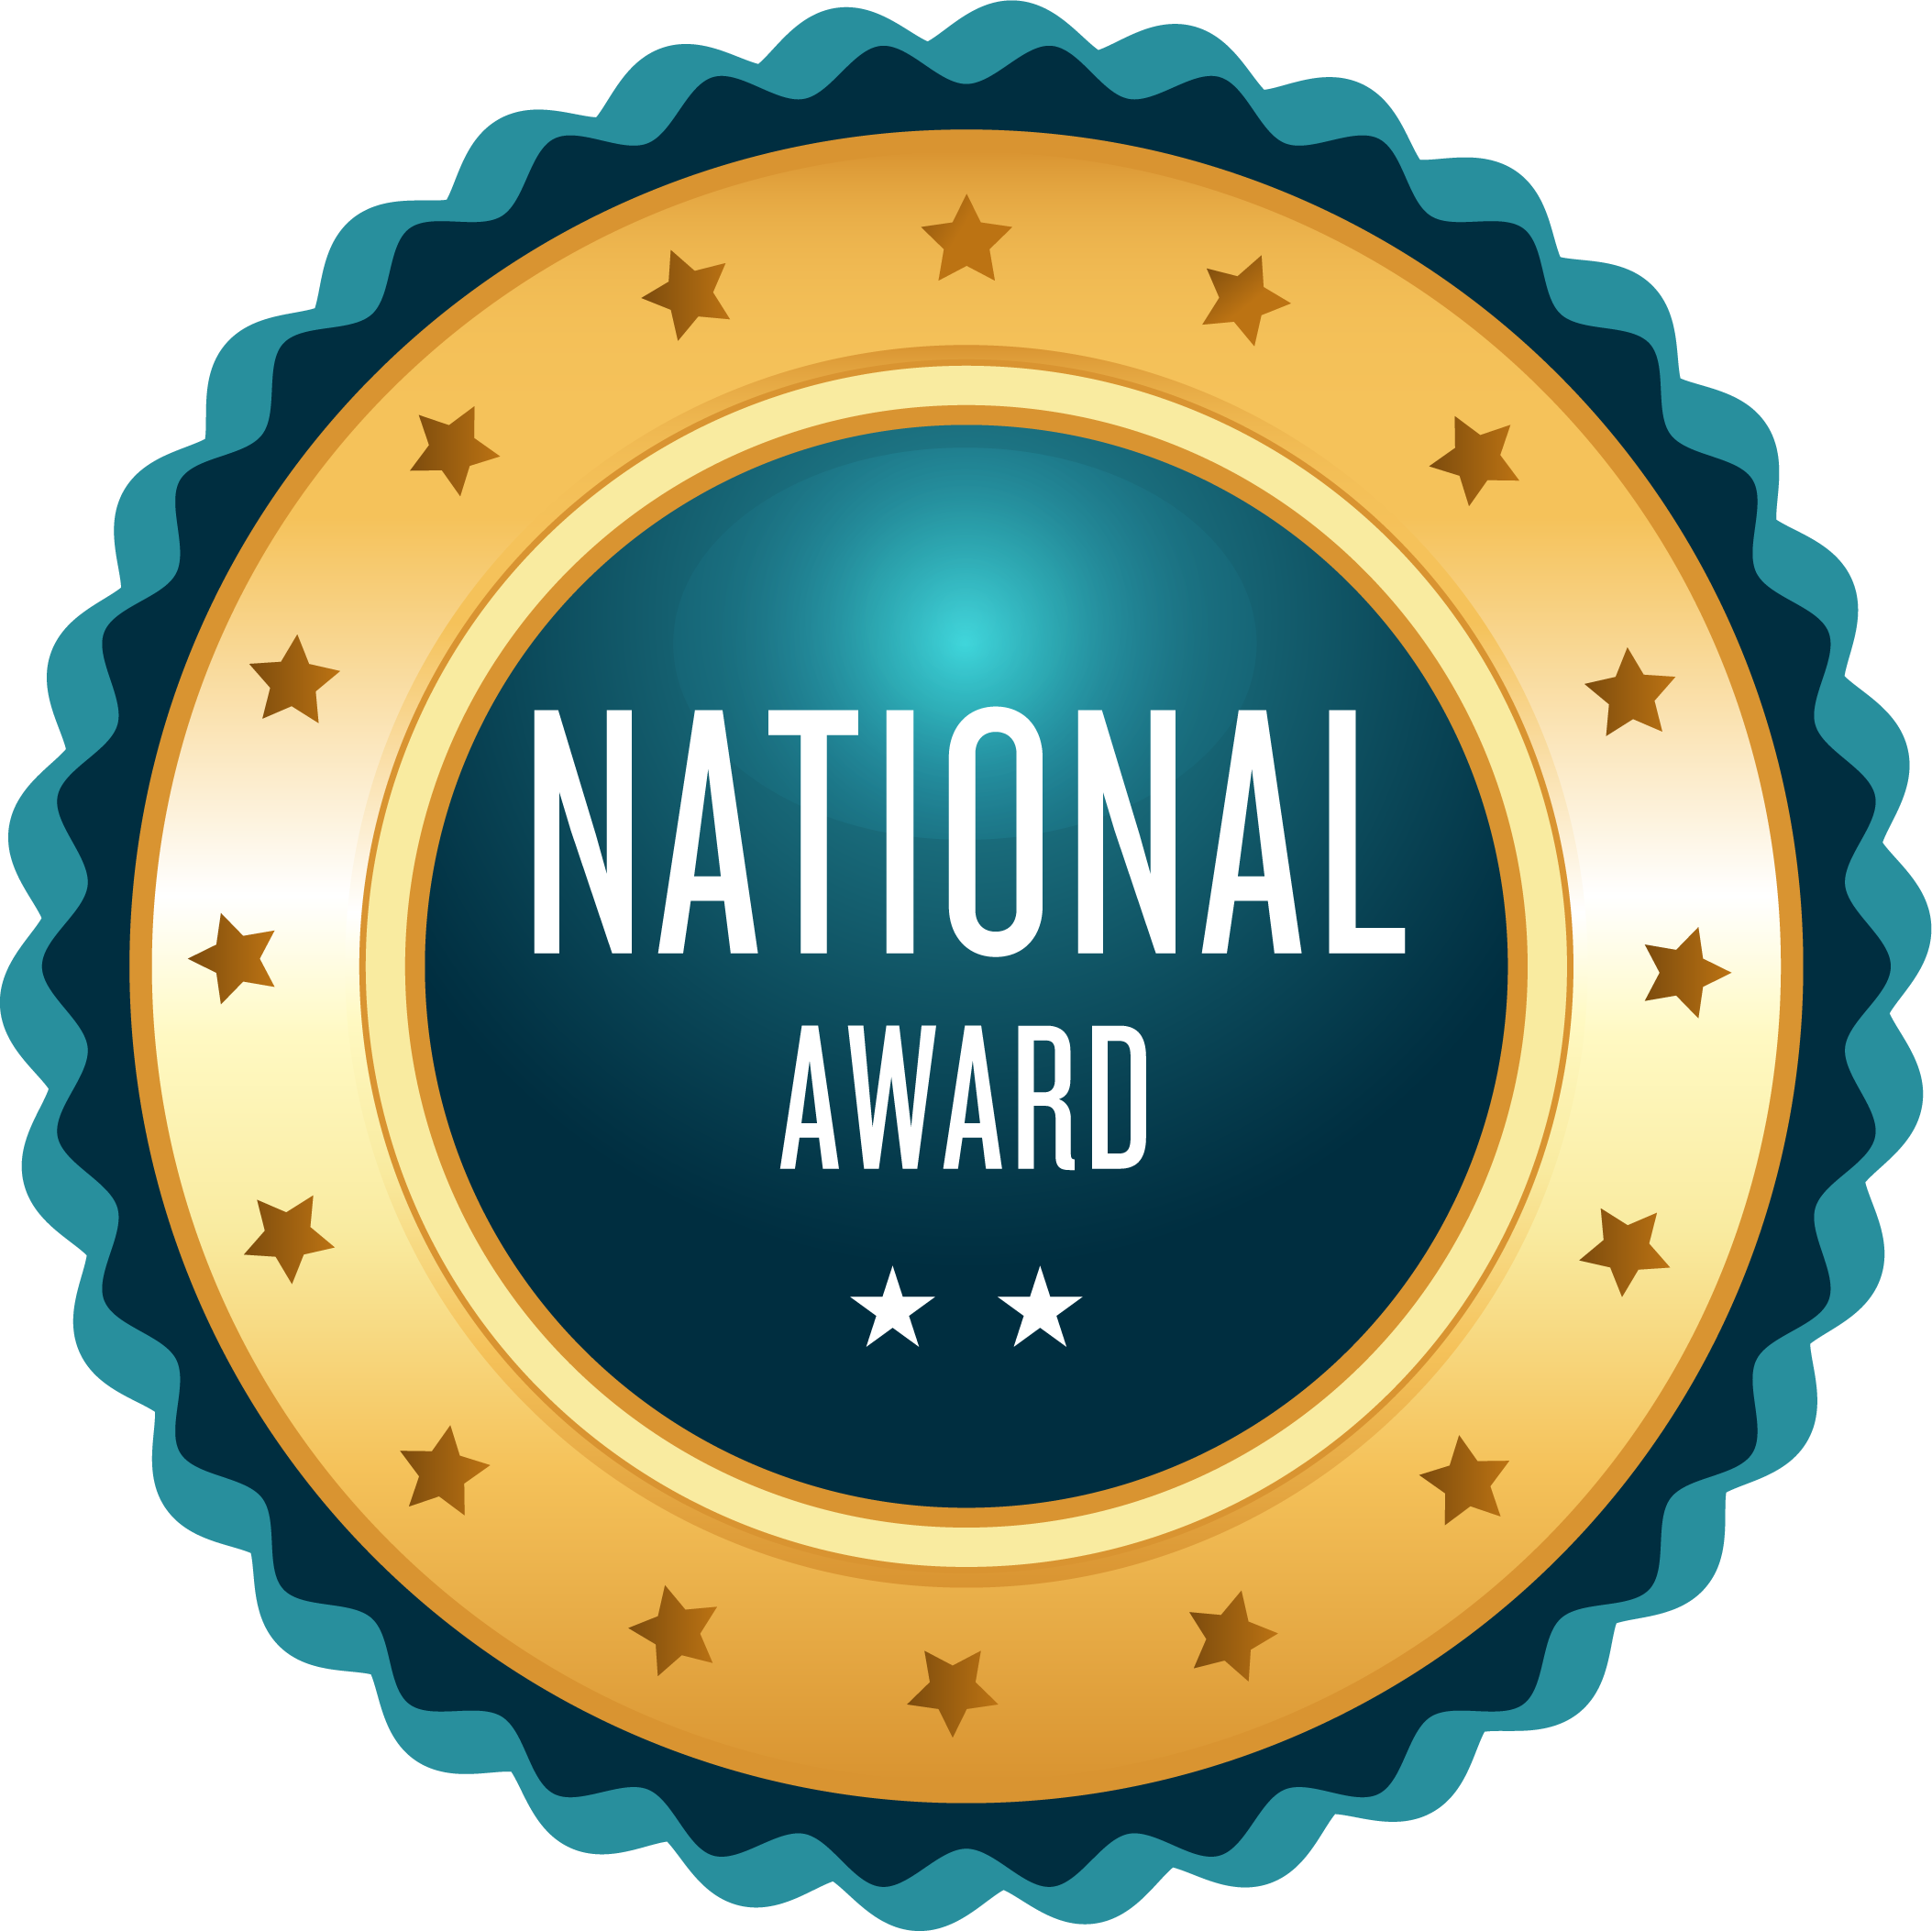 National Award Winner Shield